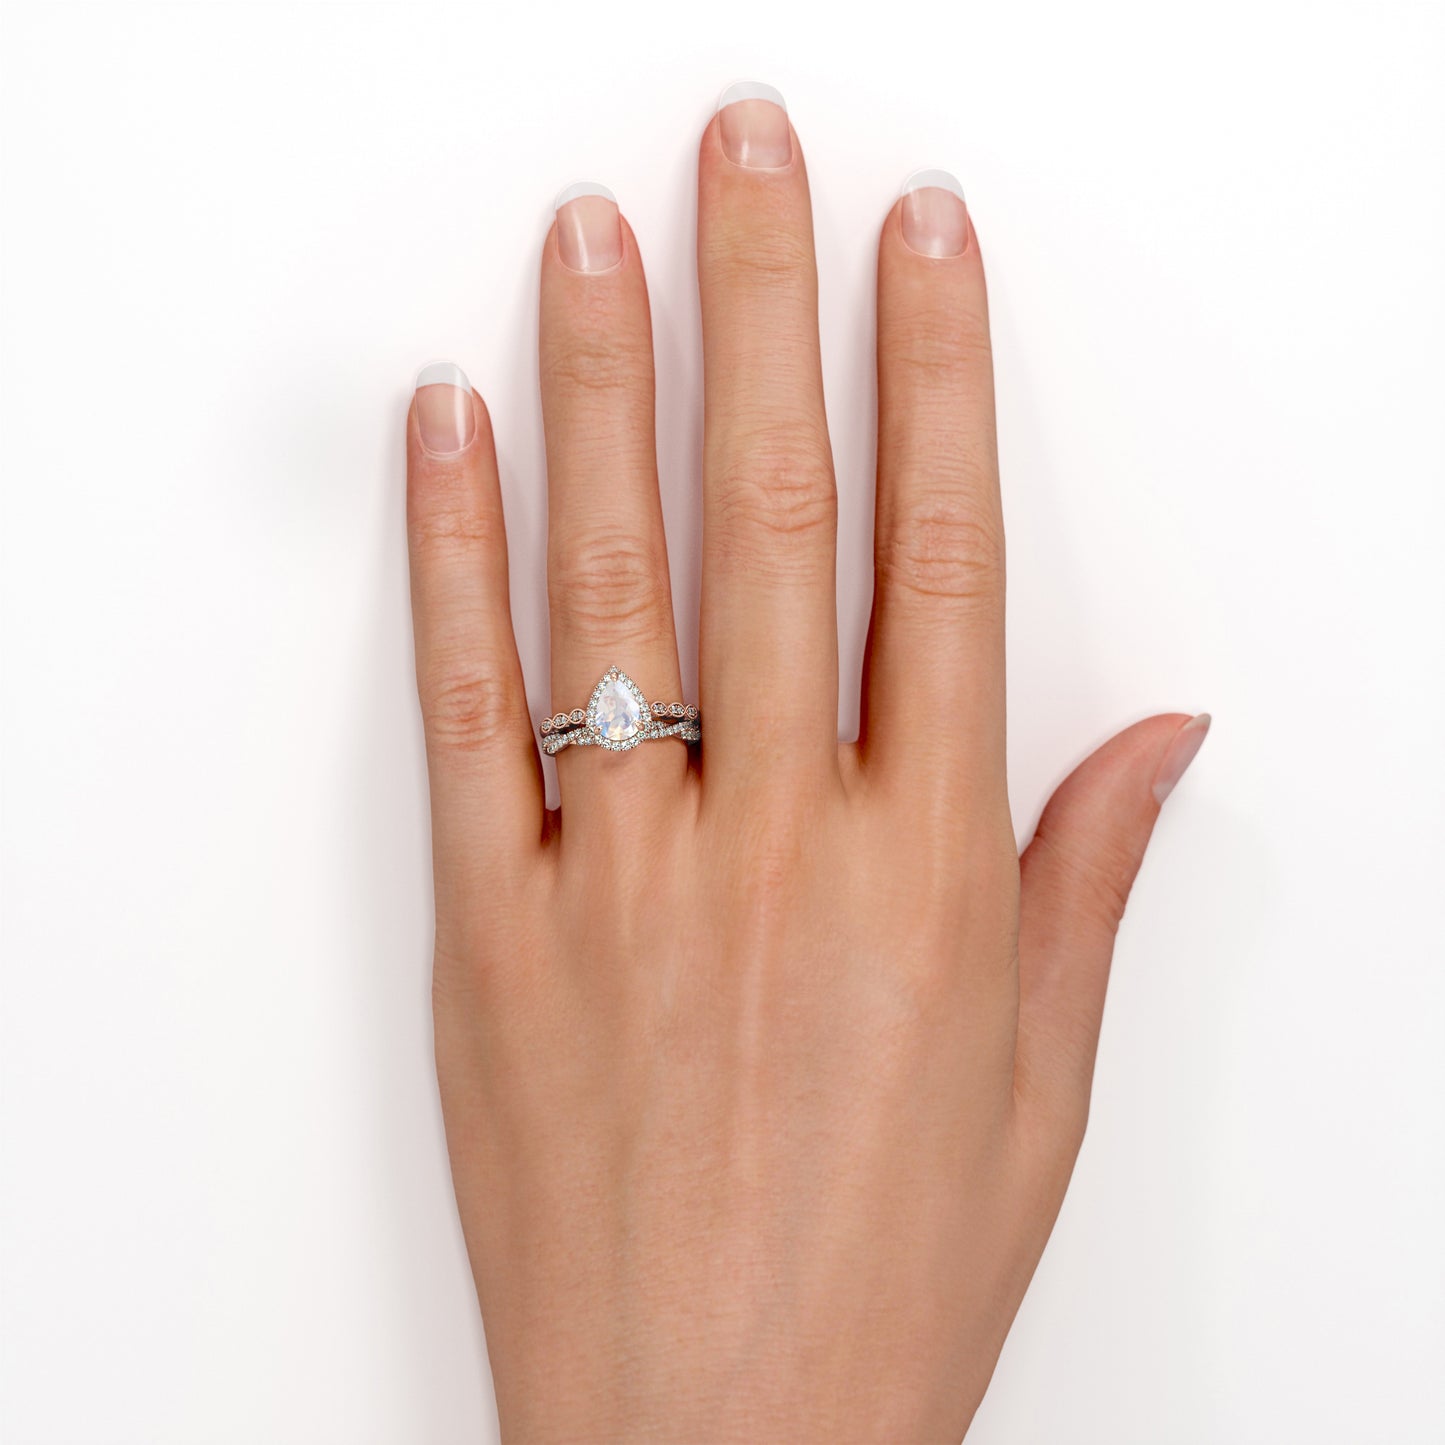 Art deco Antique 1.75 carat Pear shaped Milgrain Moonstone and diamond Wedding ring set- Anniversary ring in White gold